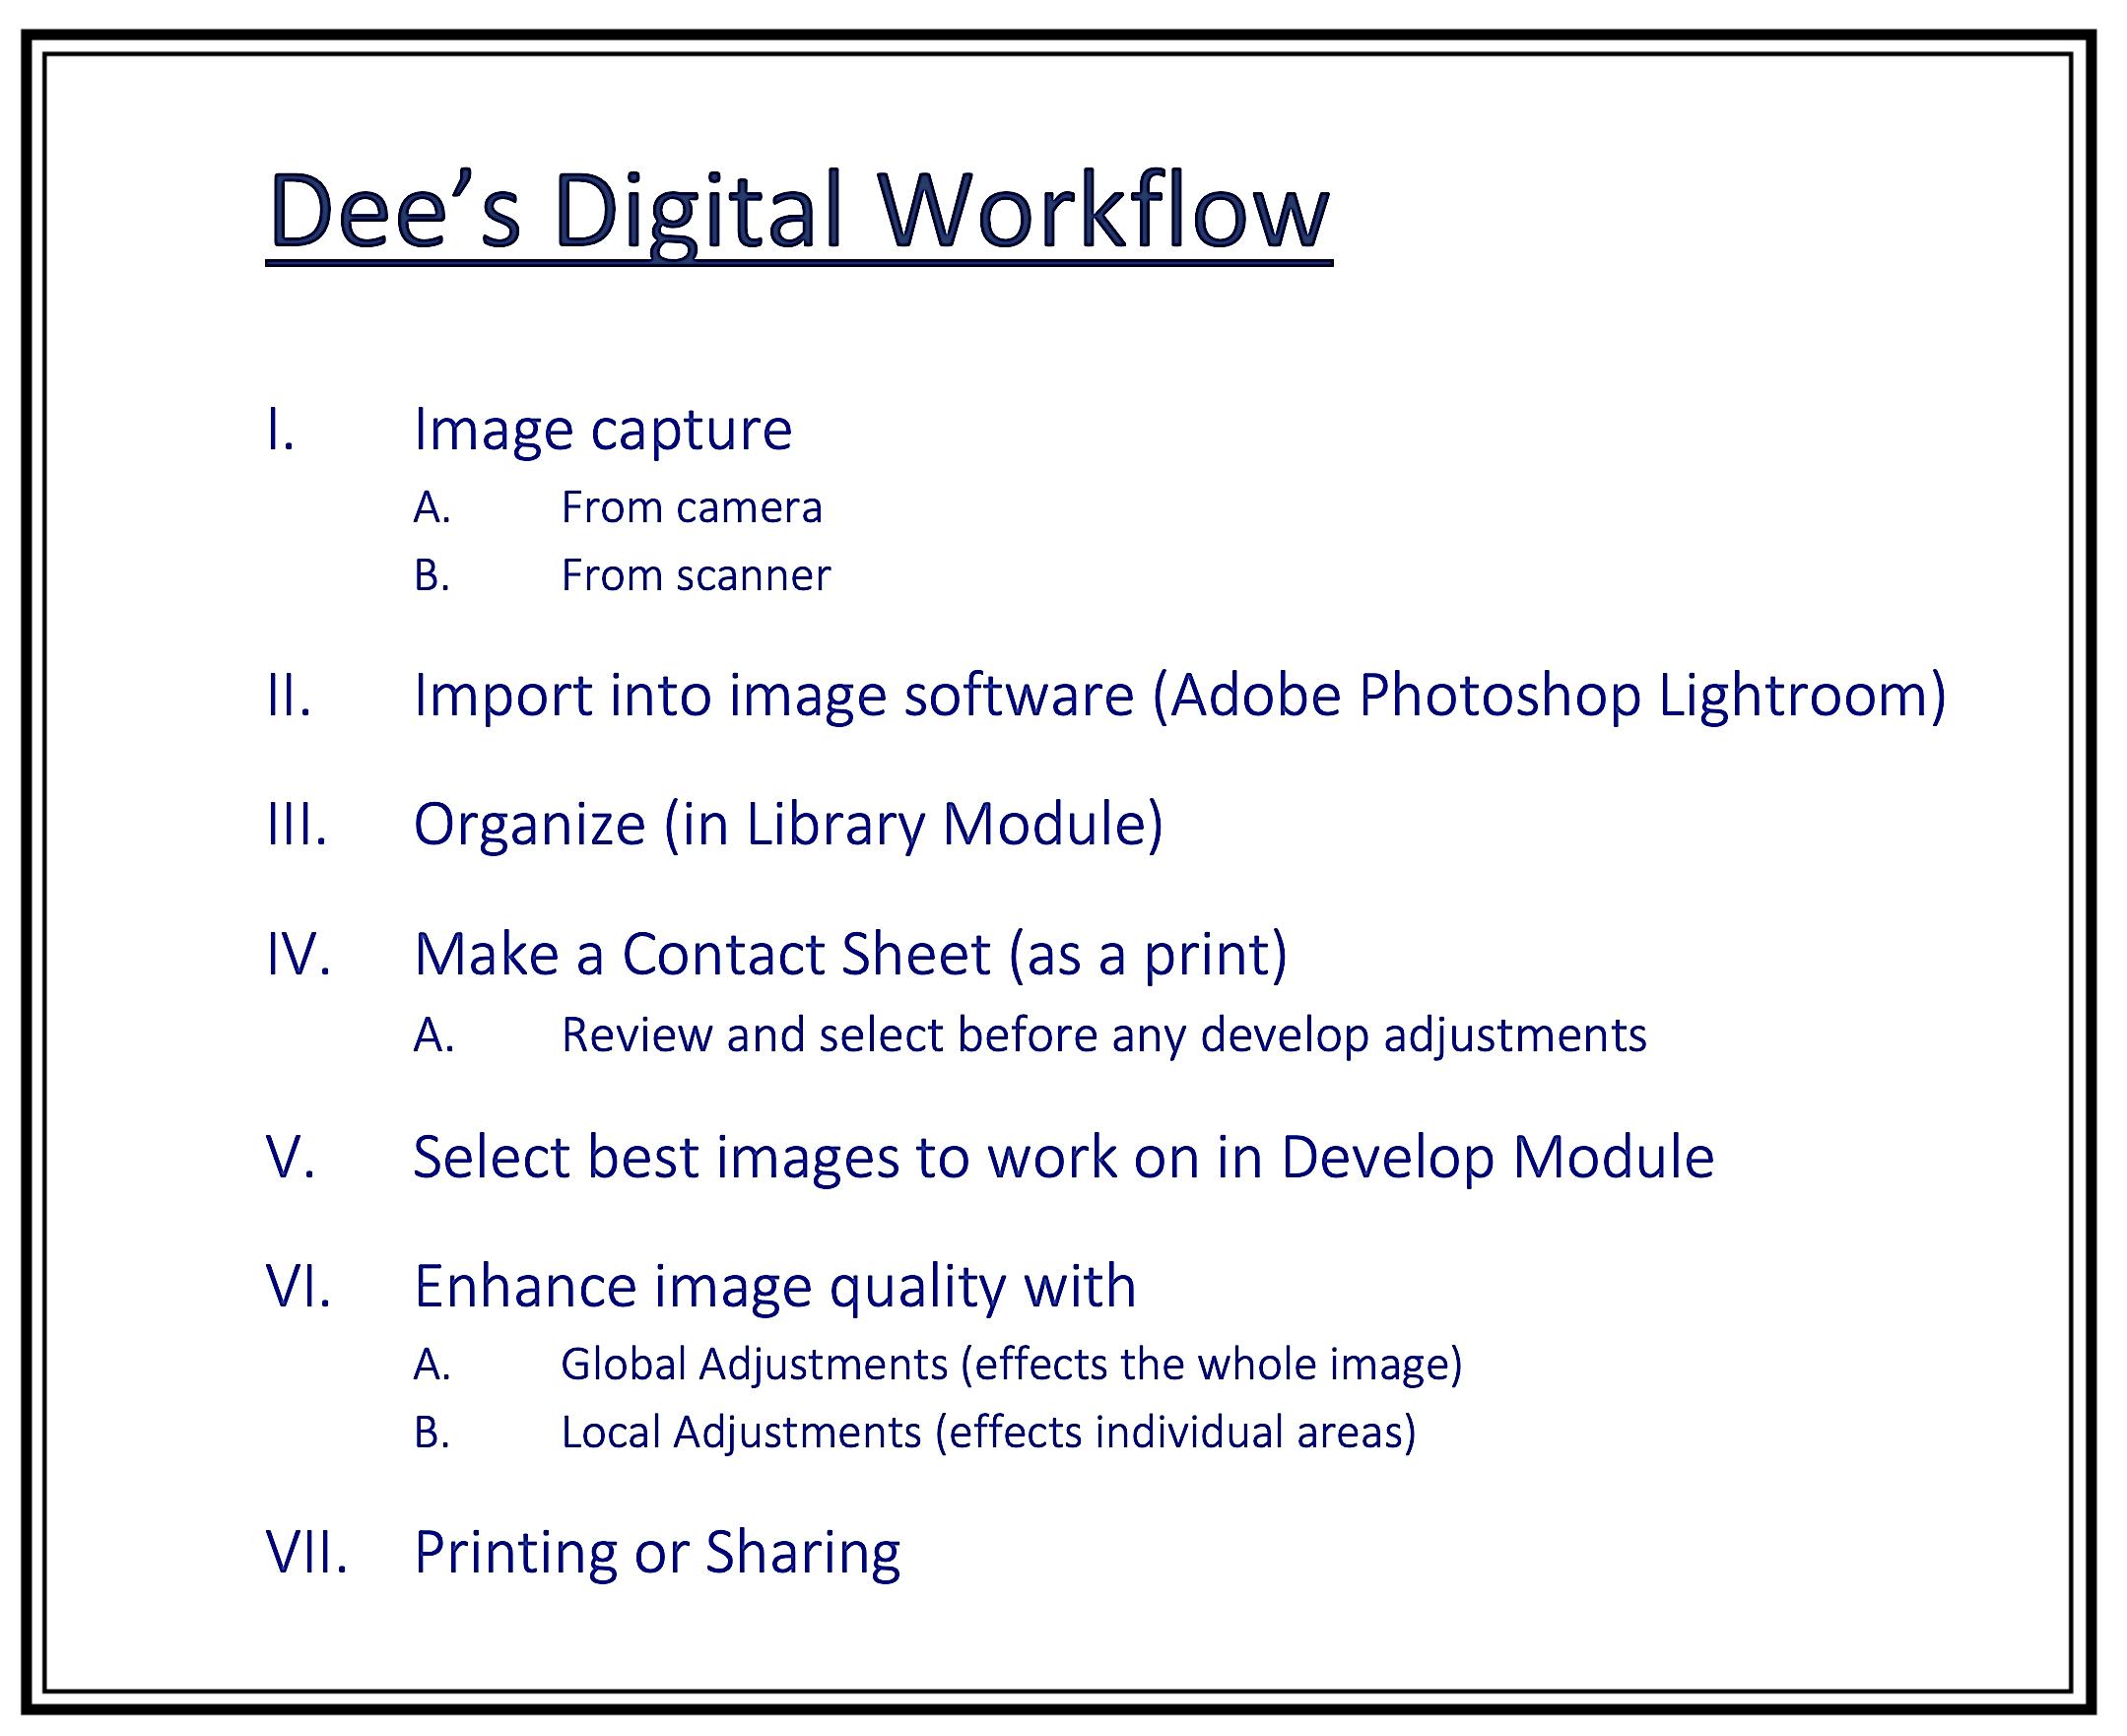 Dee's Digital Workflow